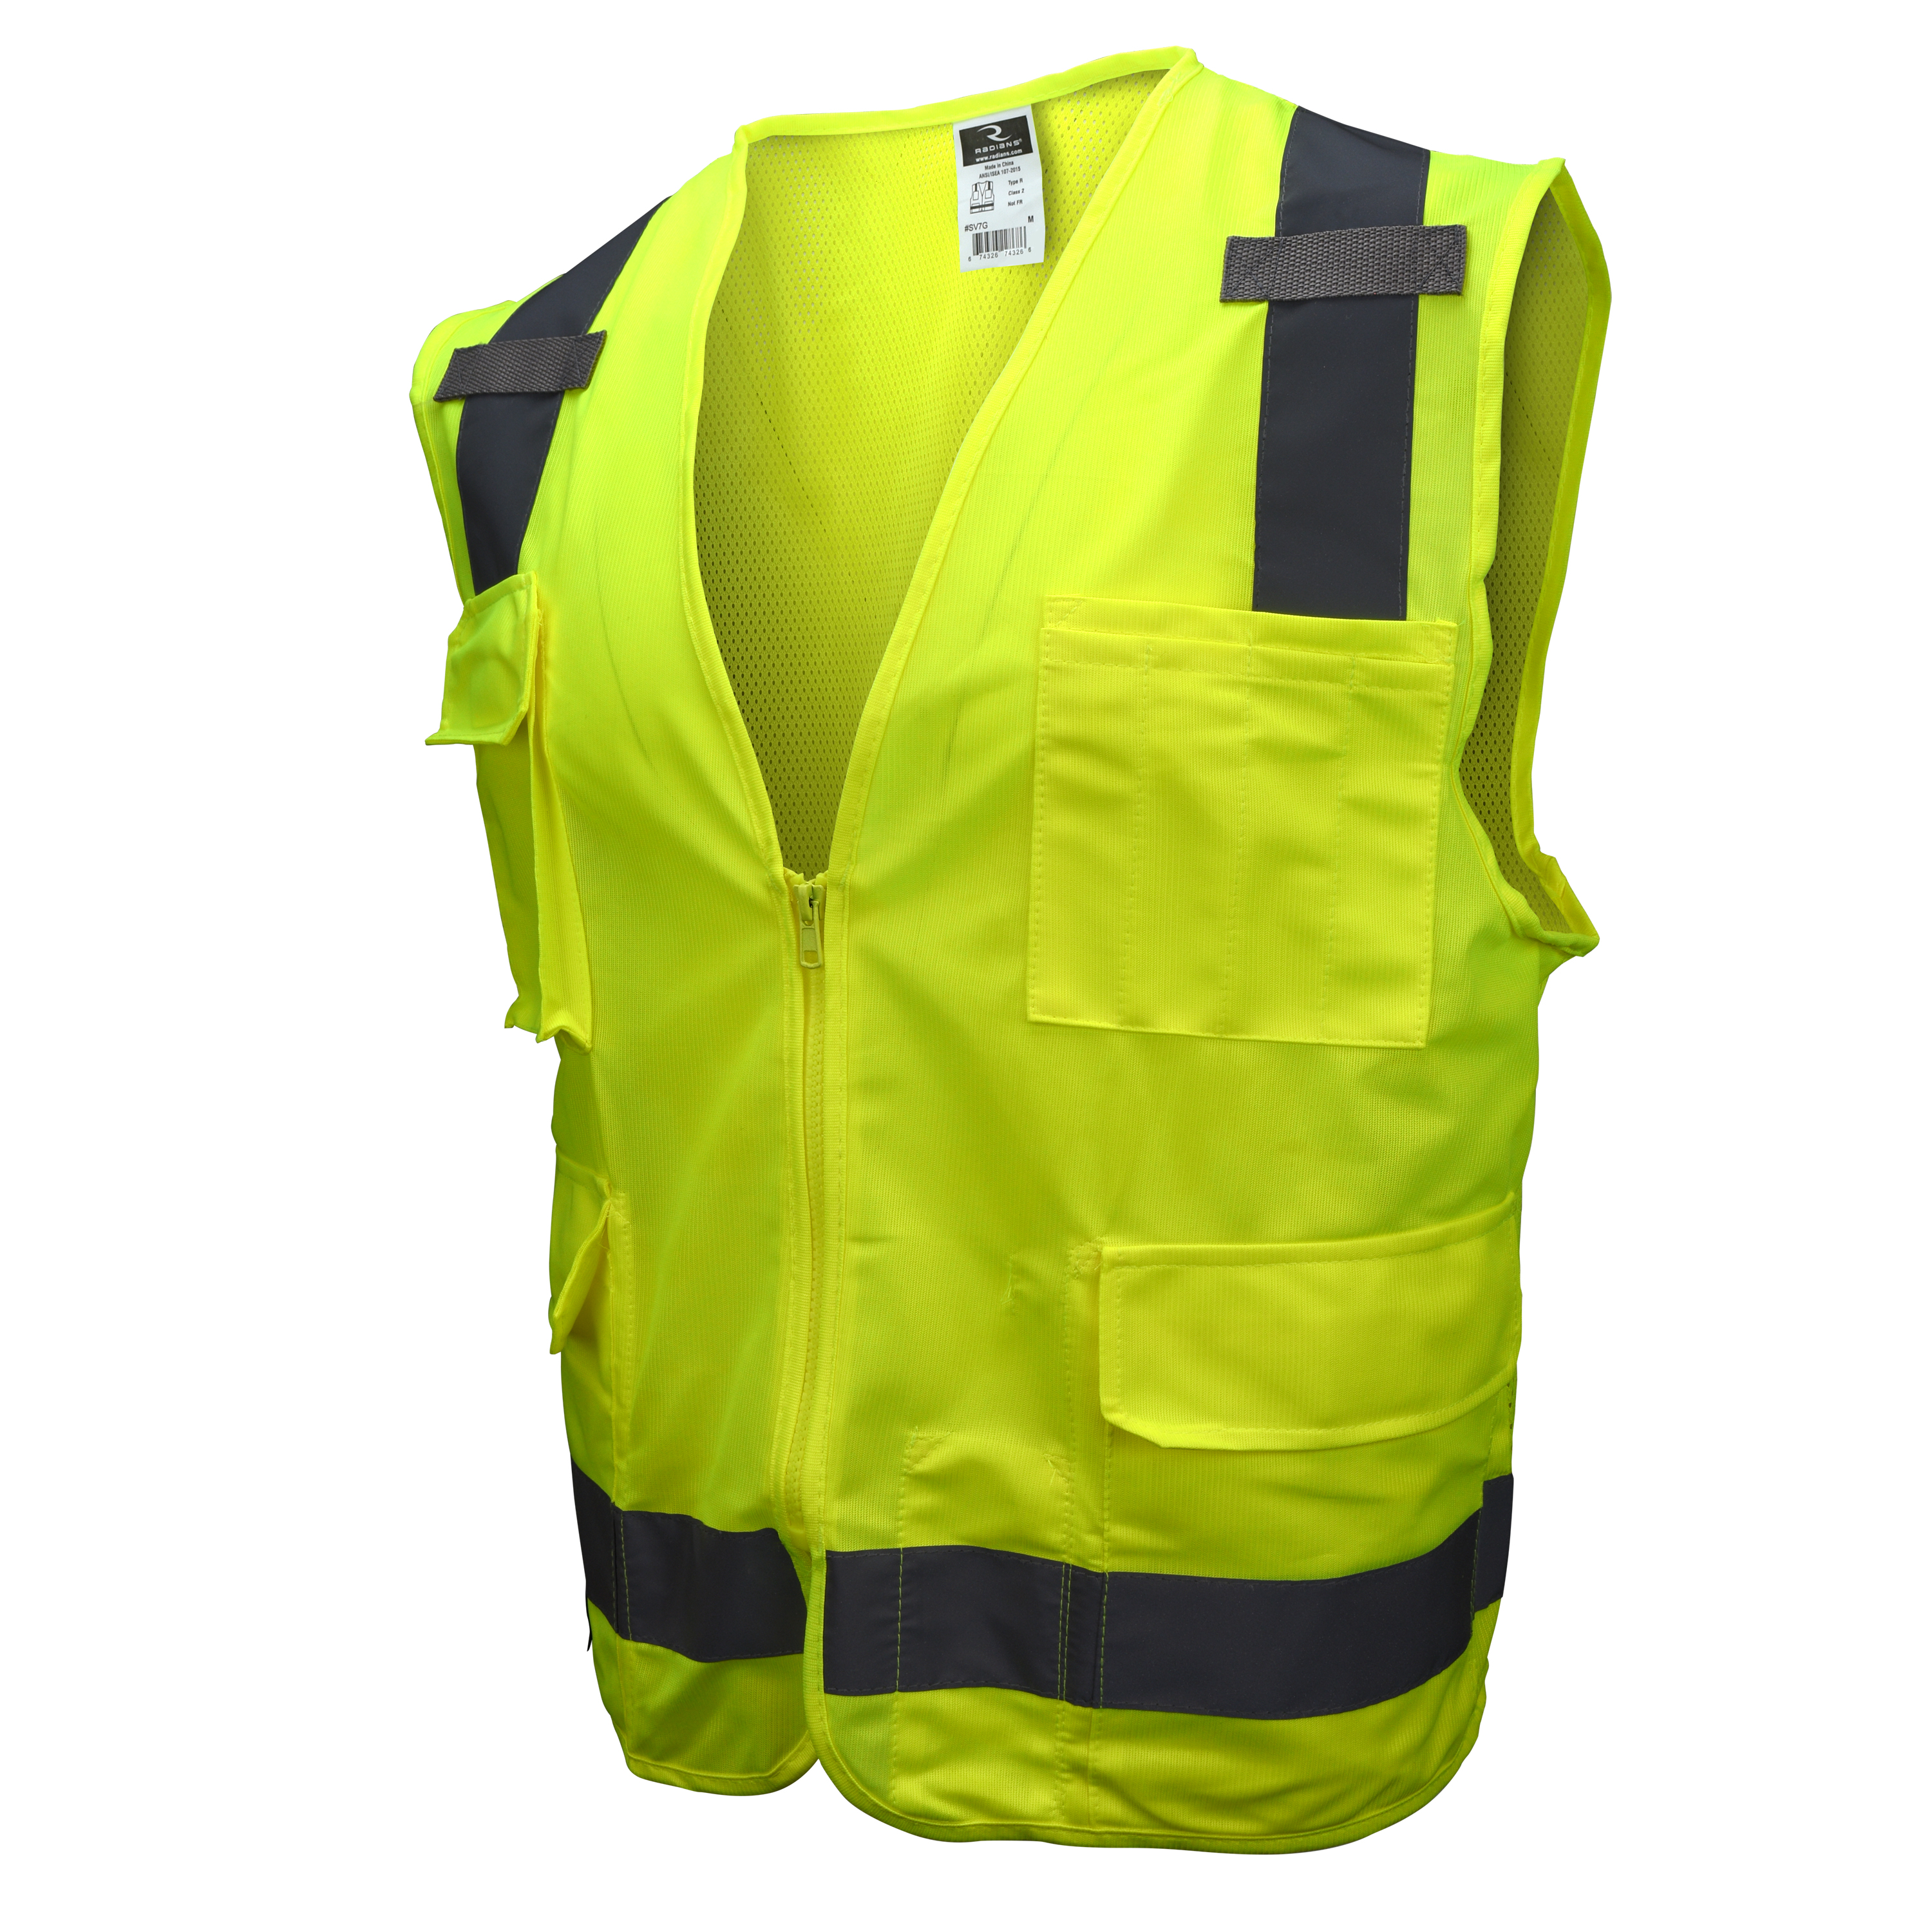 SV7 Surveyor Type R Class 2 Solid/Mesh Safety Vest - Green - Size 2X - Safety Vests